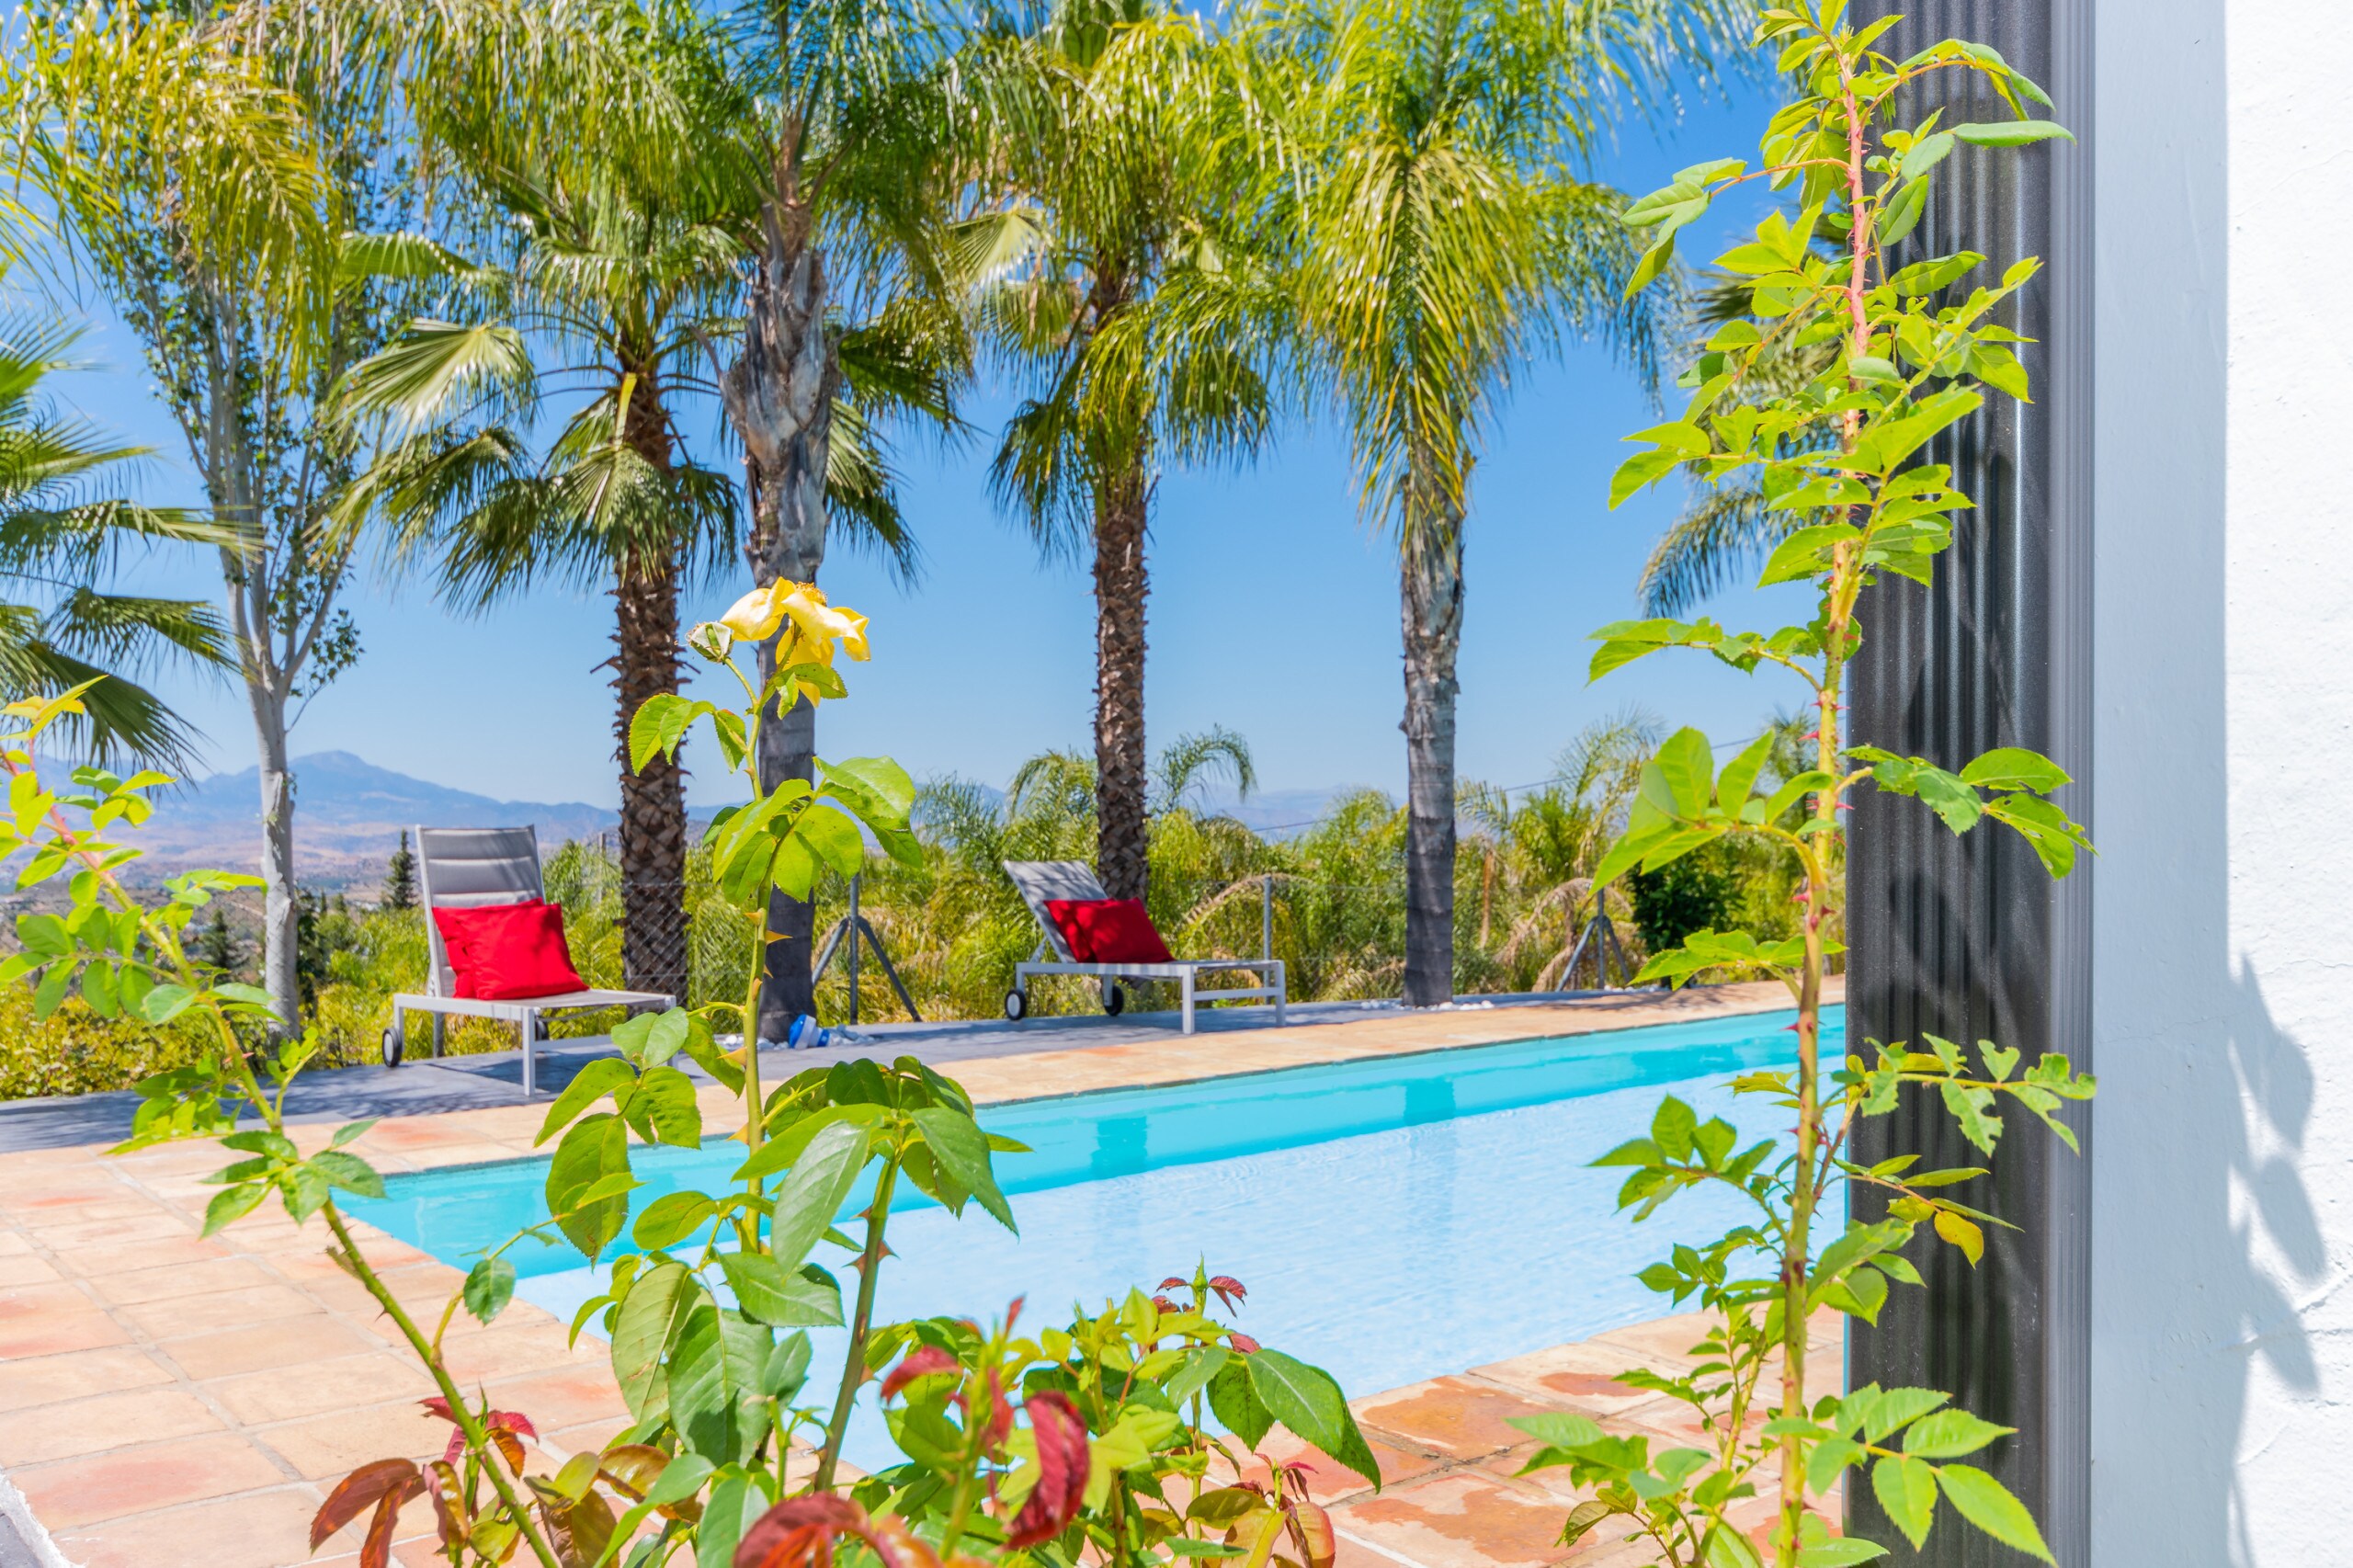 Enjoy the private pool of this Finca in Alhaurín el Grande